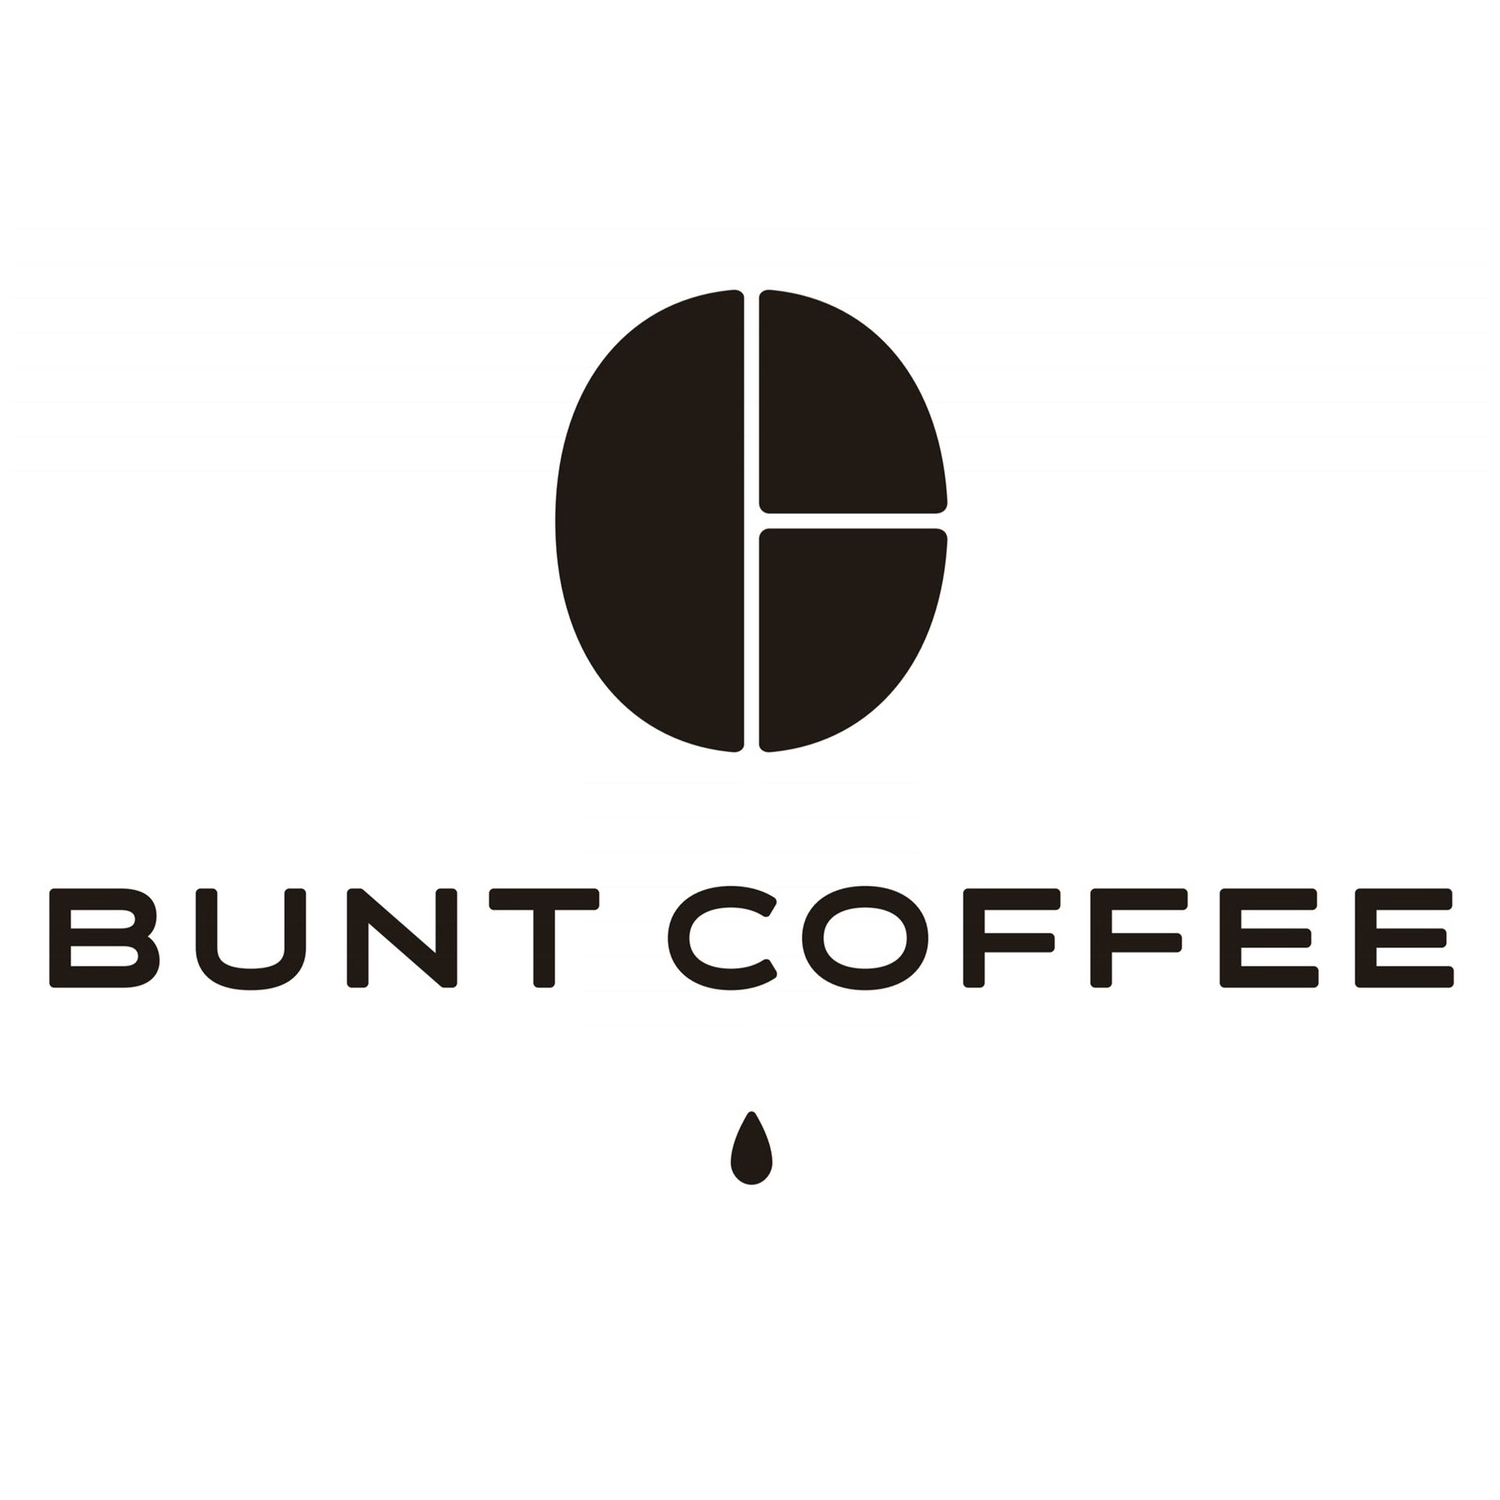 BUNT COFFEE